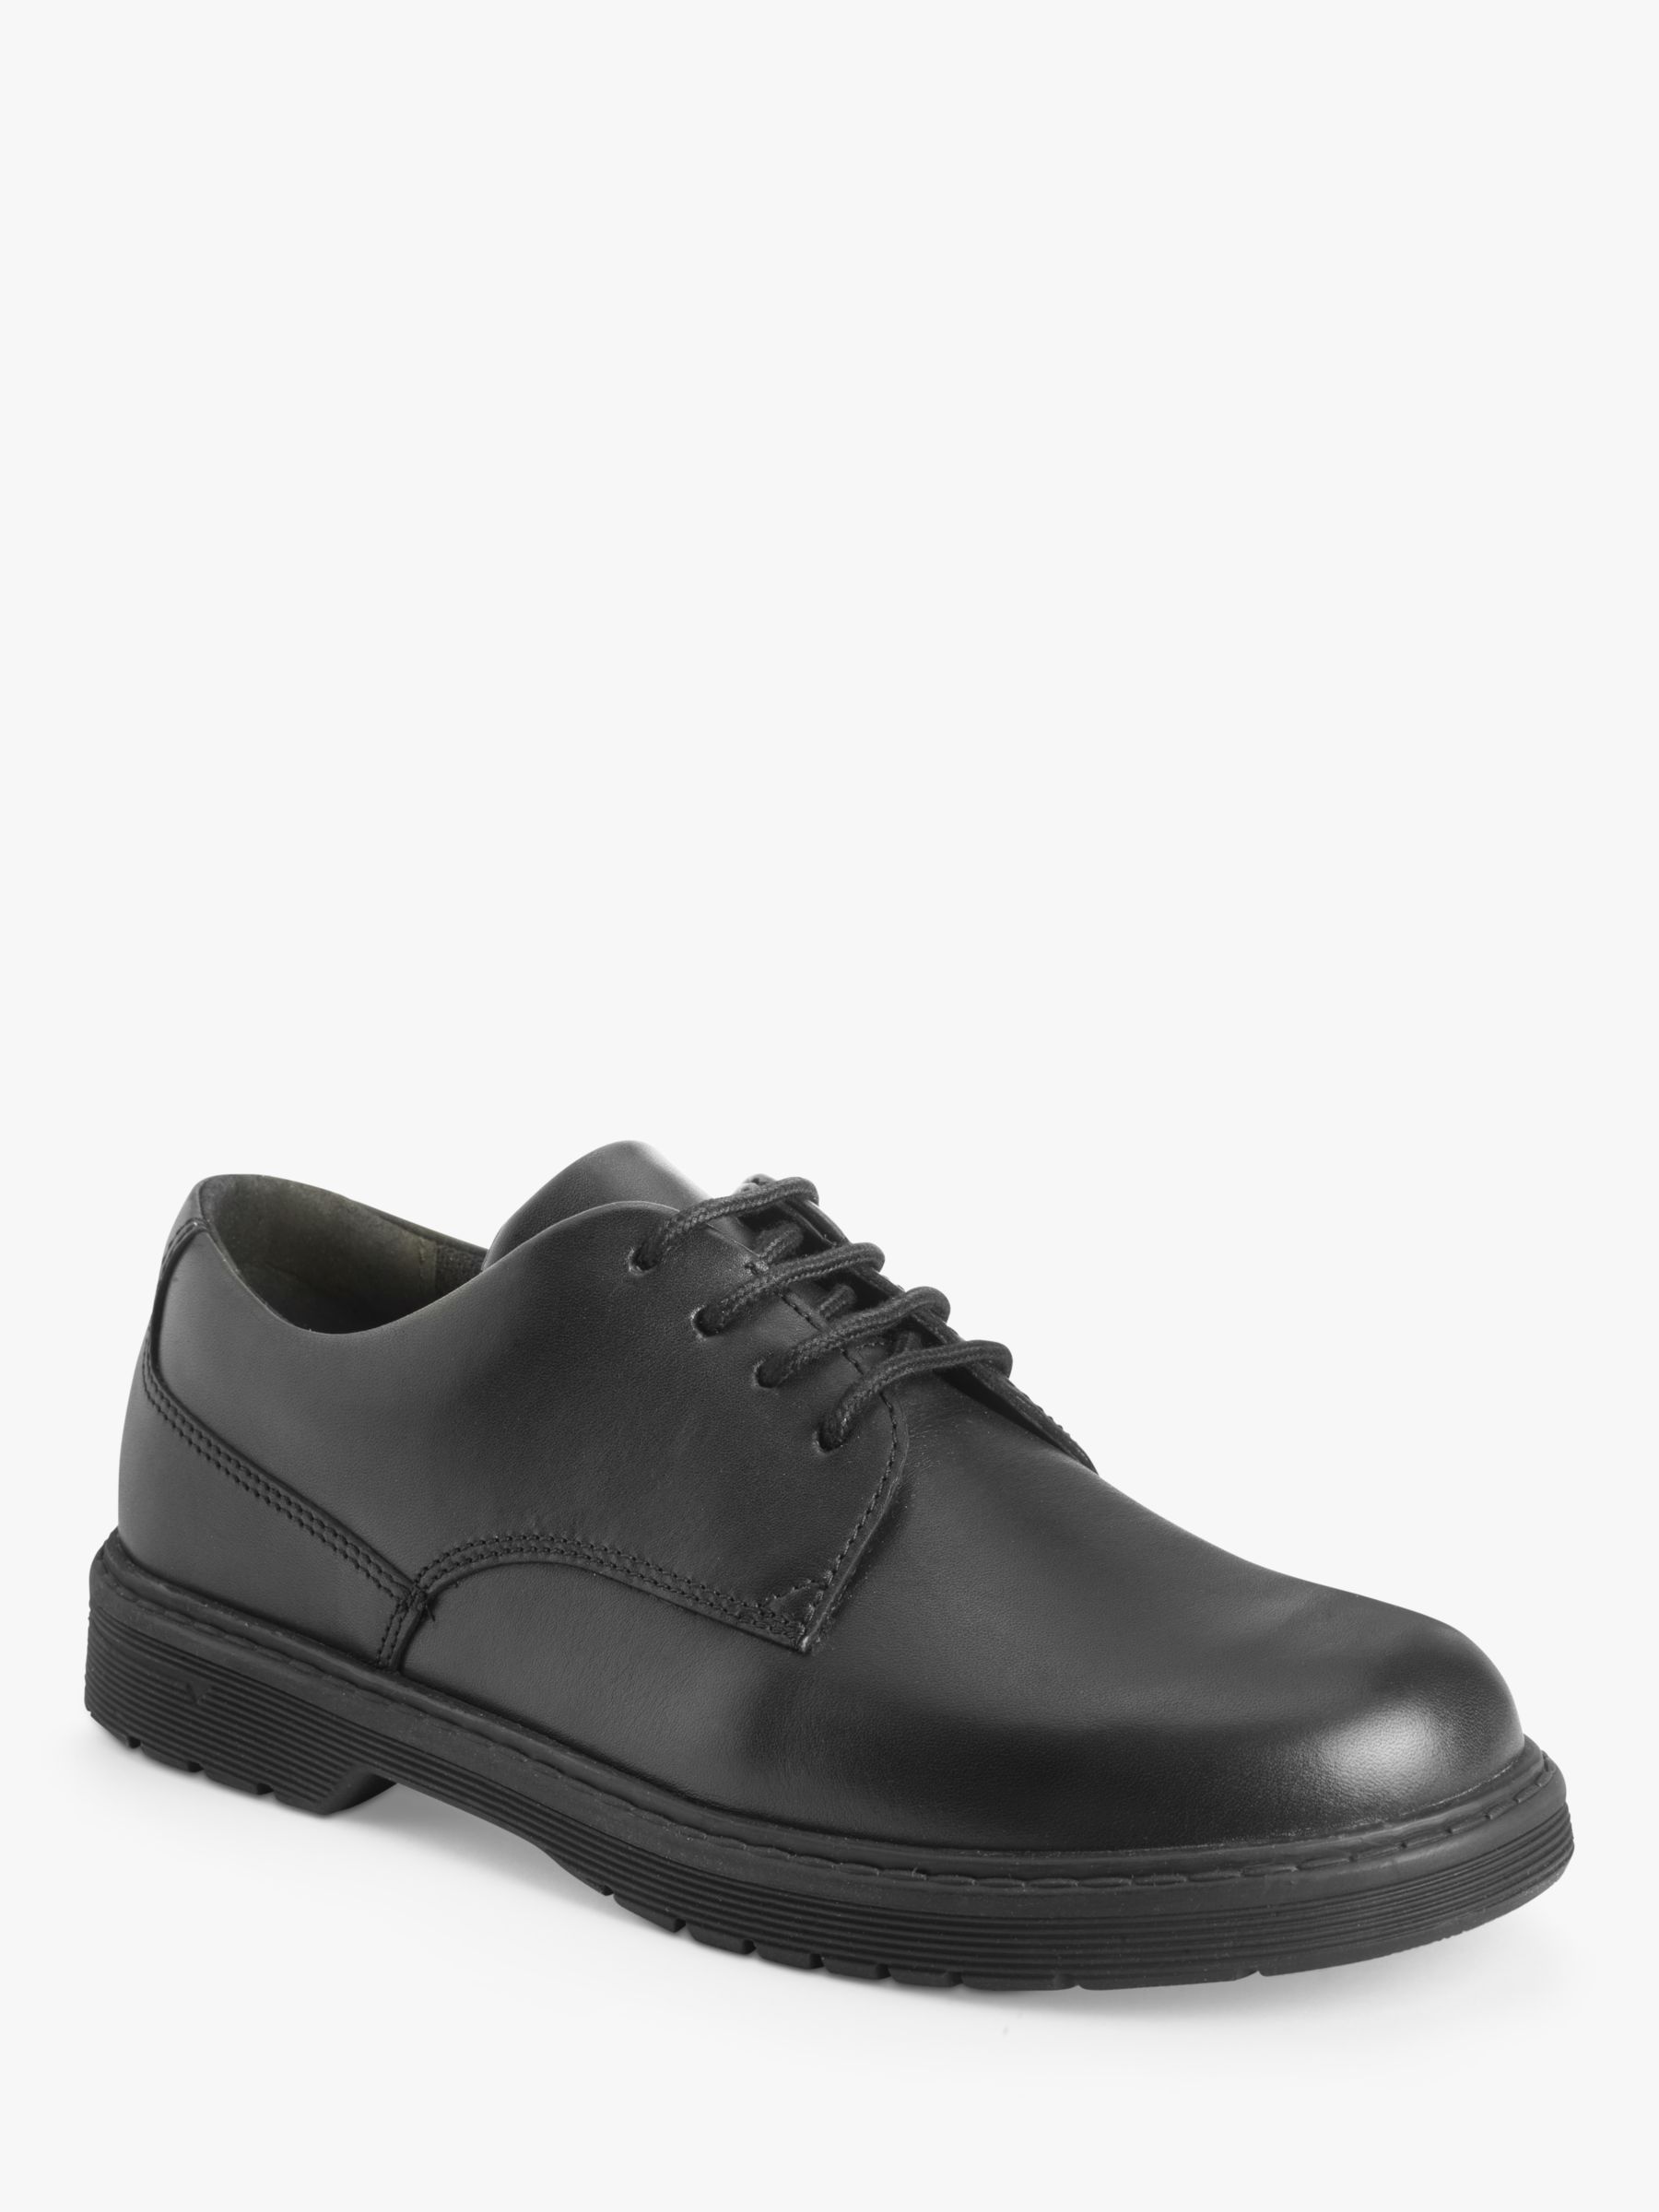 Start-Rite Kids' Glitch Leather School Shoes, Black, 3F